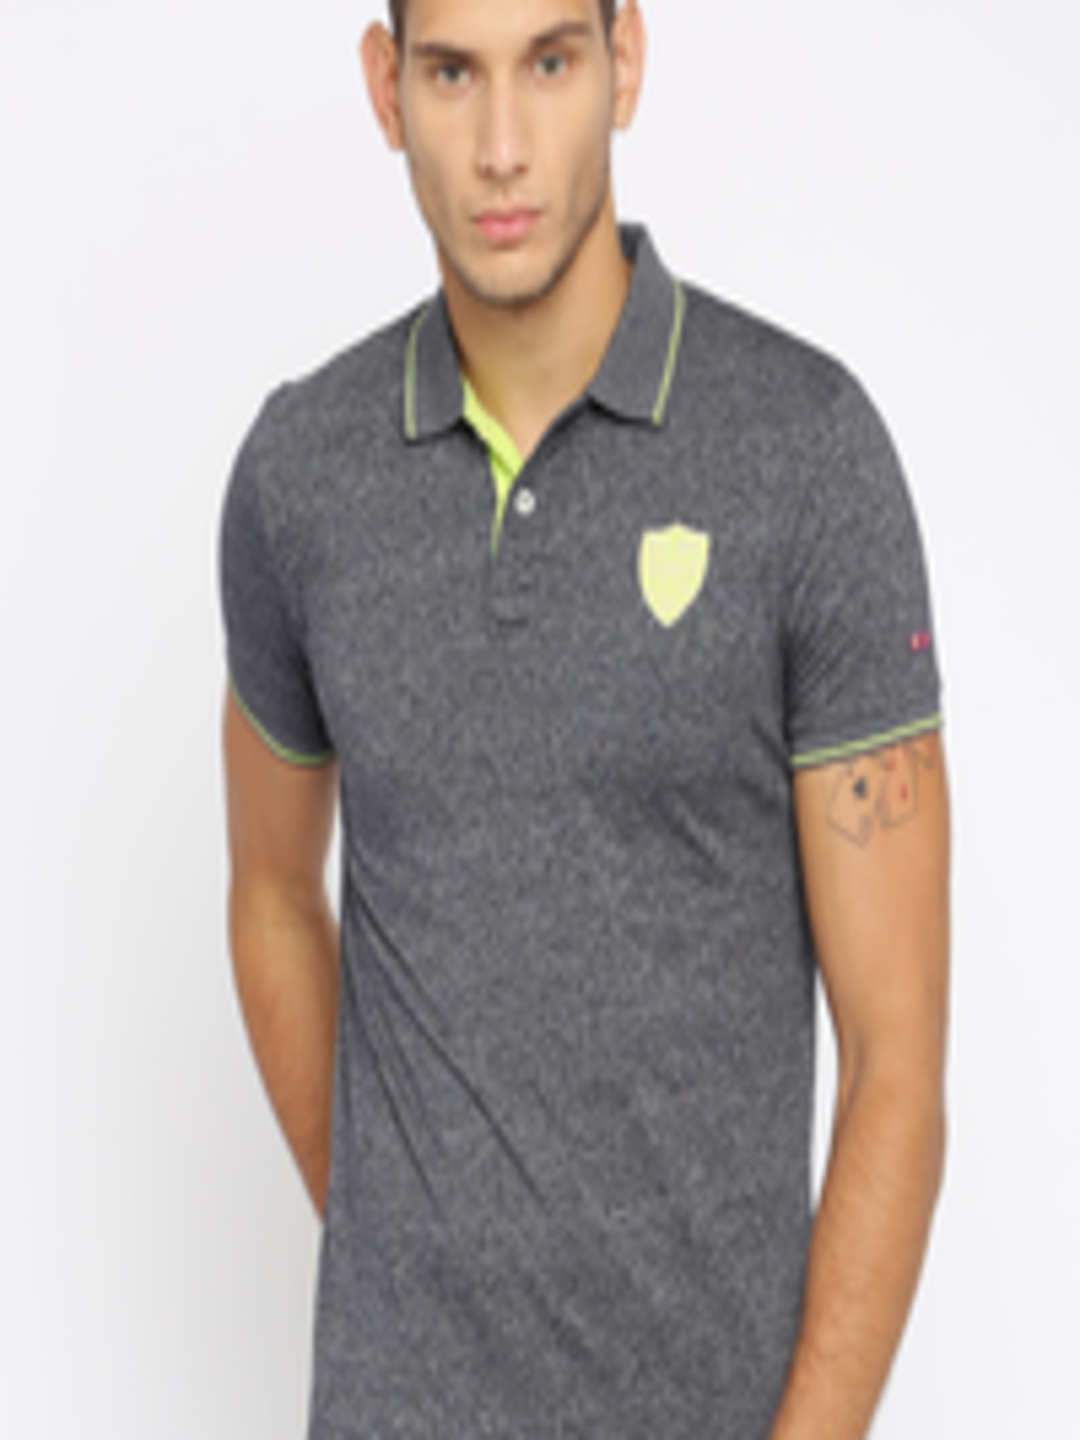 Buy Being Human Clothing Men Charcoal Grey Melange Polo T Shirt